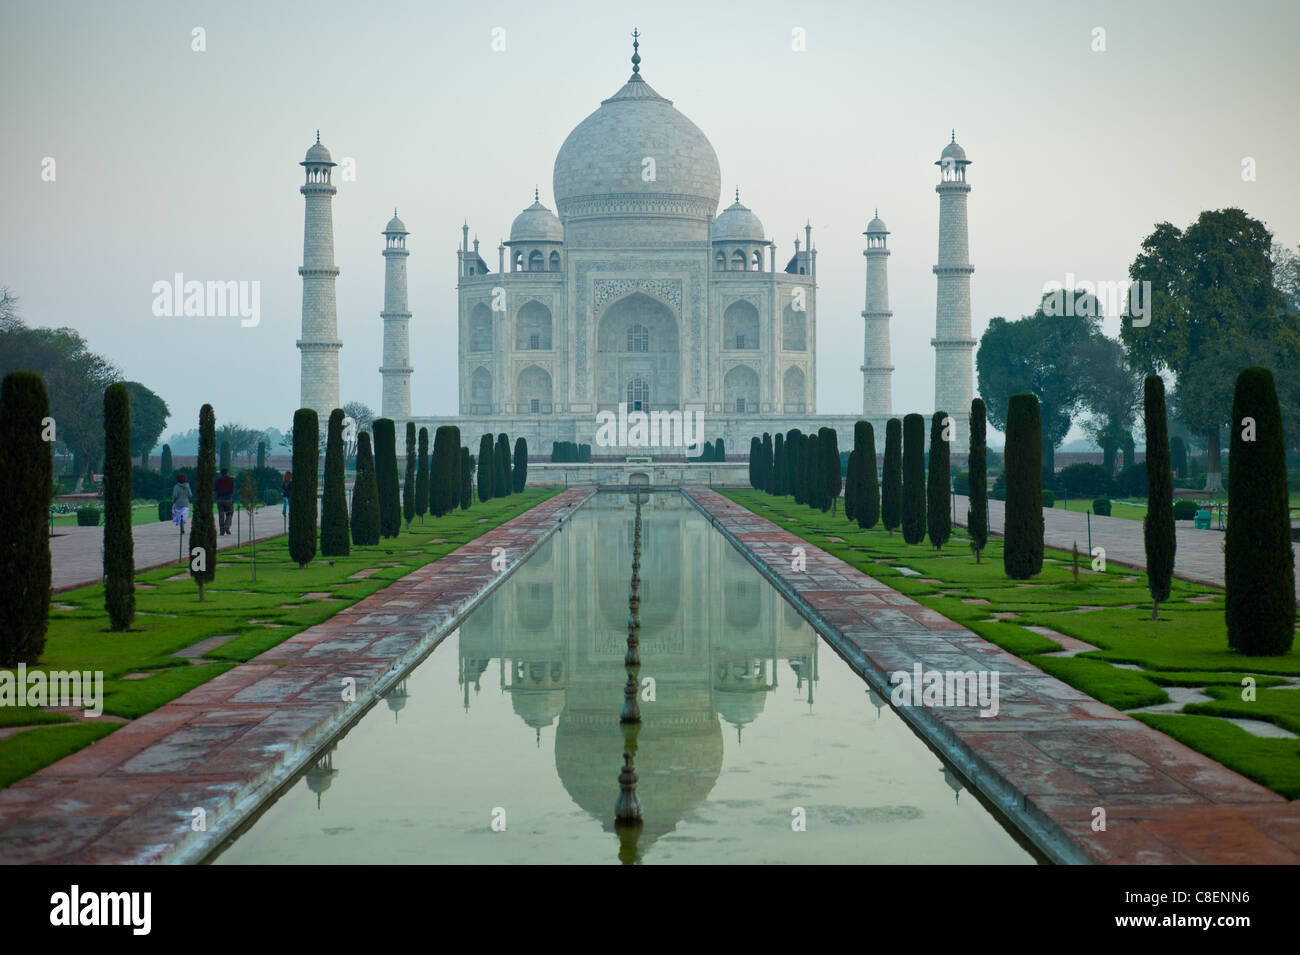 The Taj Mahal mausoleum southern view with reflecting pool and cypress trees, Uttar Pradesh, India Stock Photo